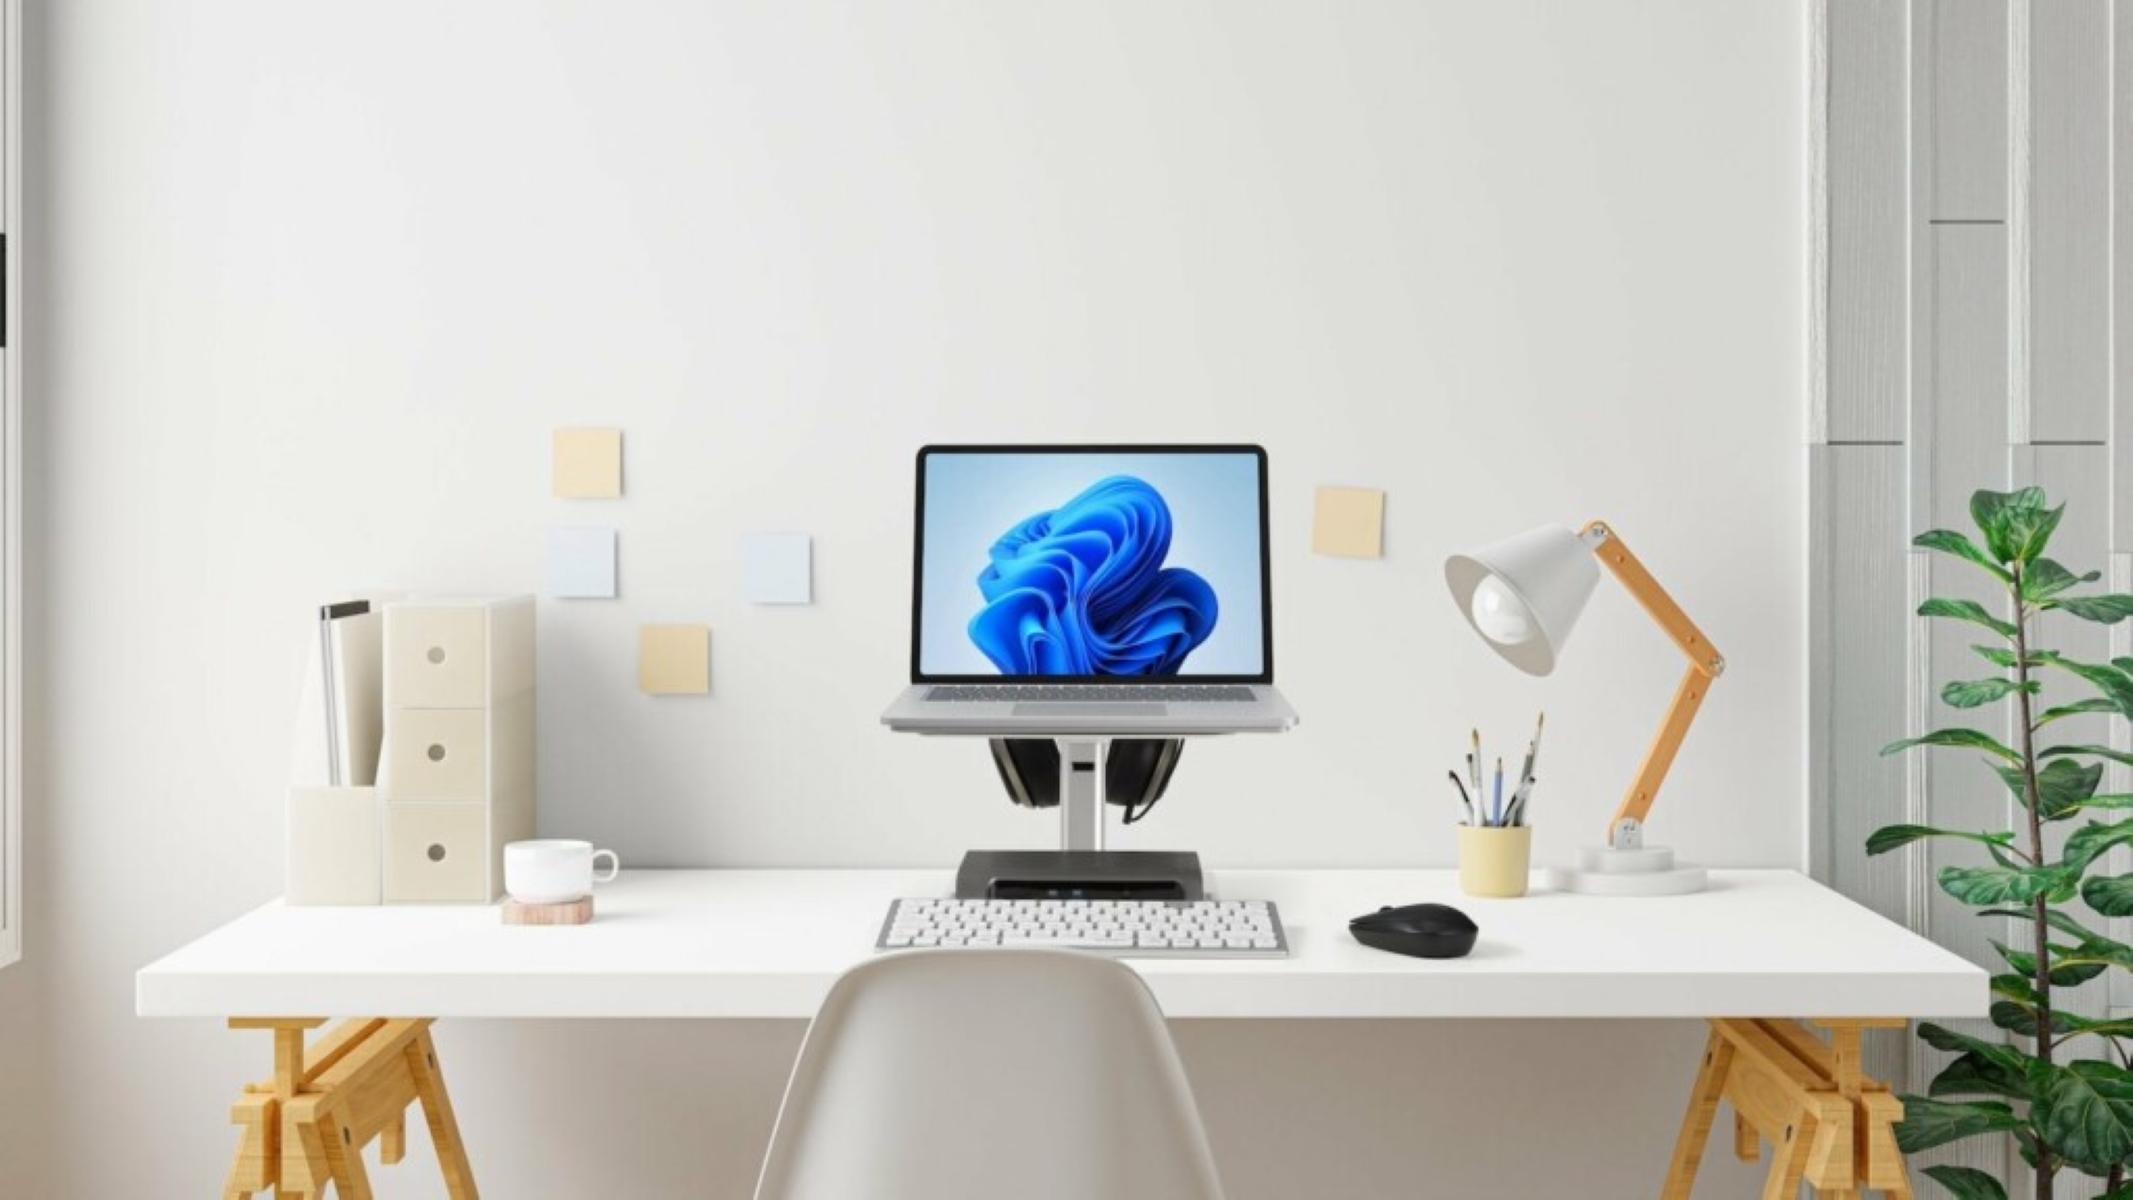 9 Best Desk Gadgets For Office for 2023